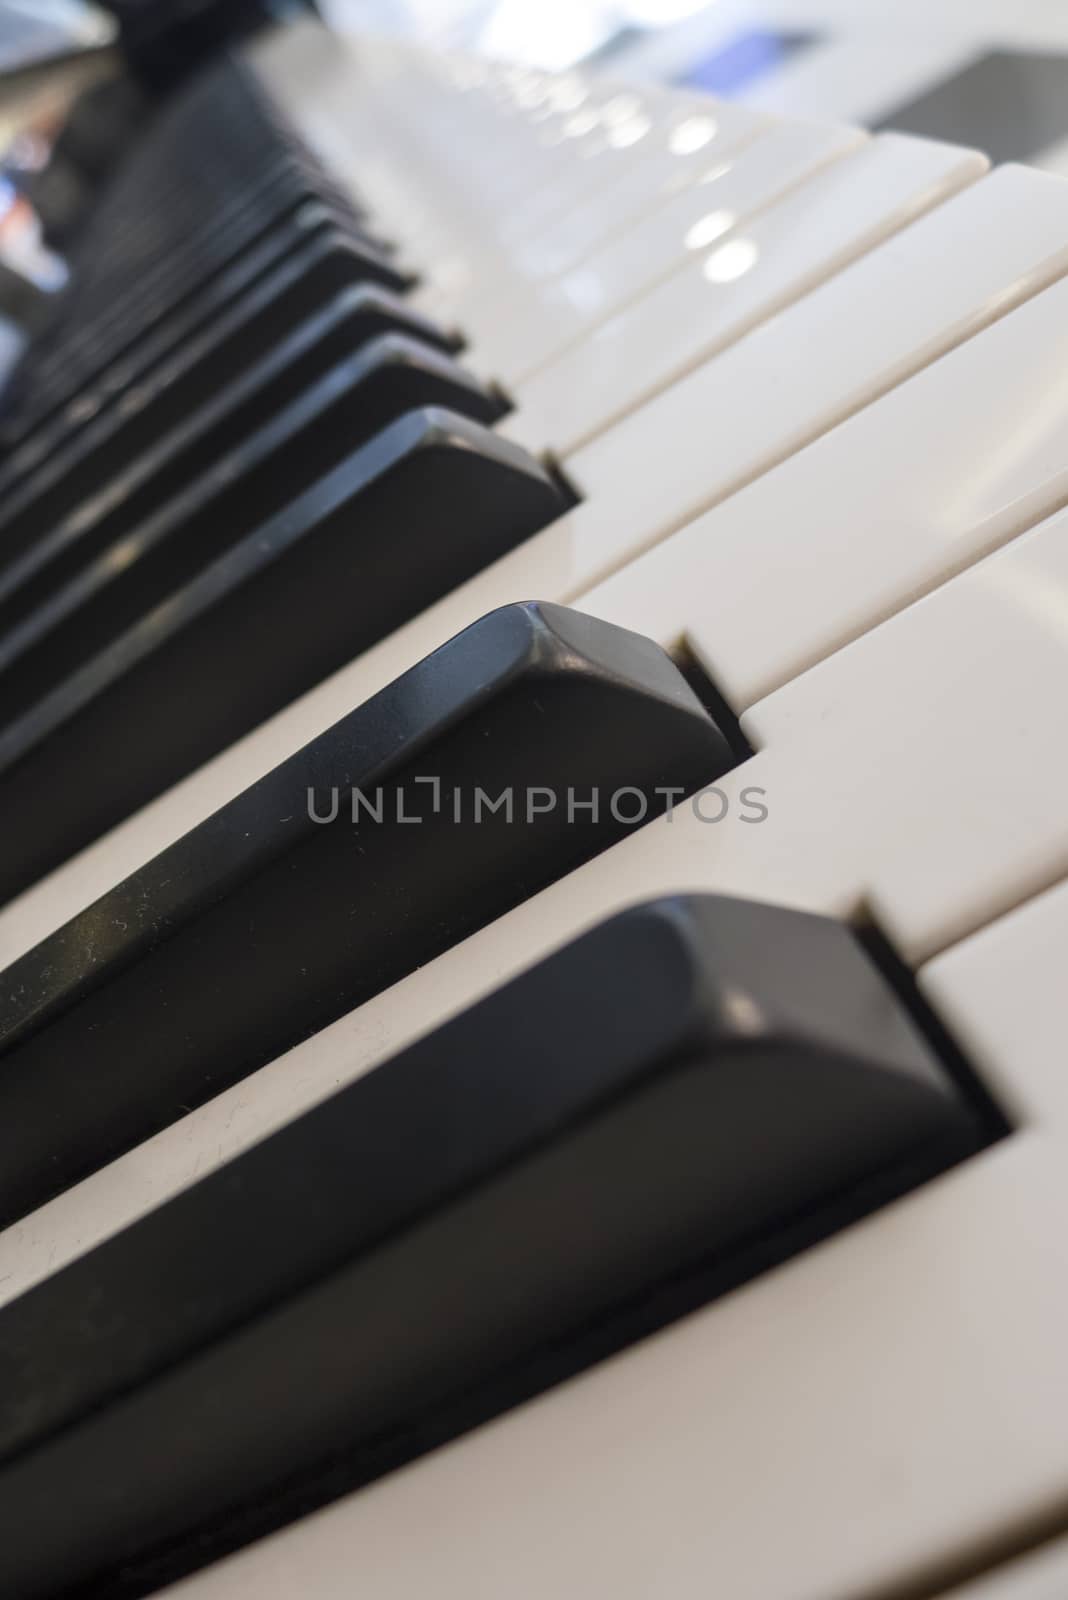 Close up of piano musical instrument keys.